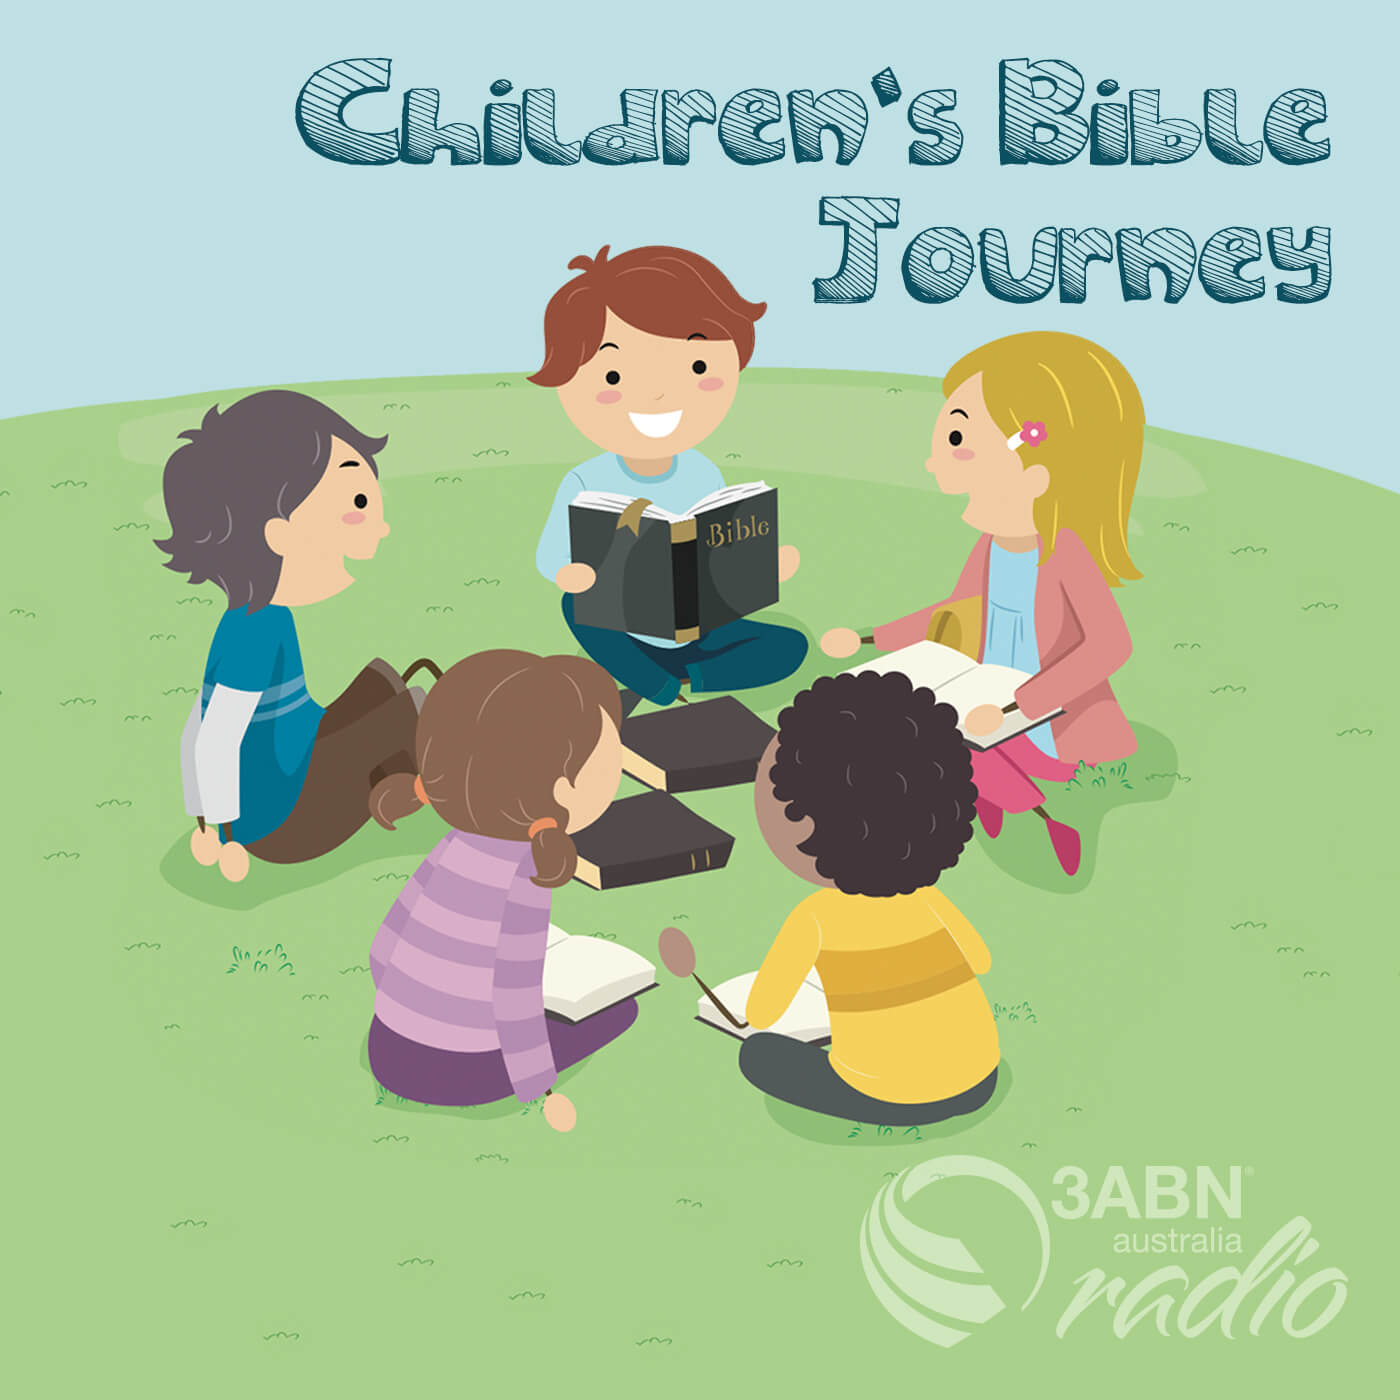 Children's Bible Journey - 2141